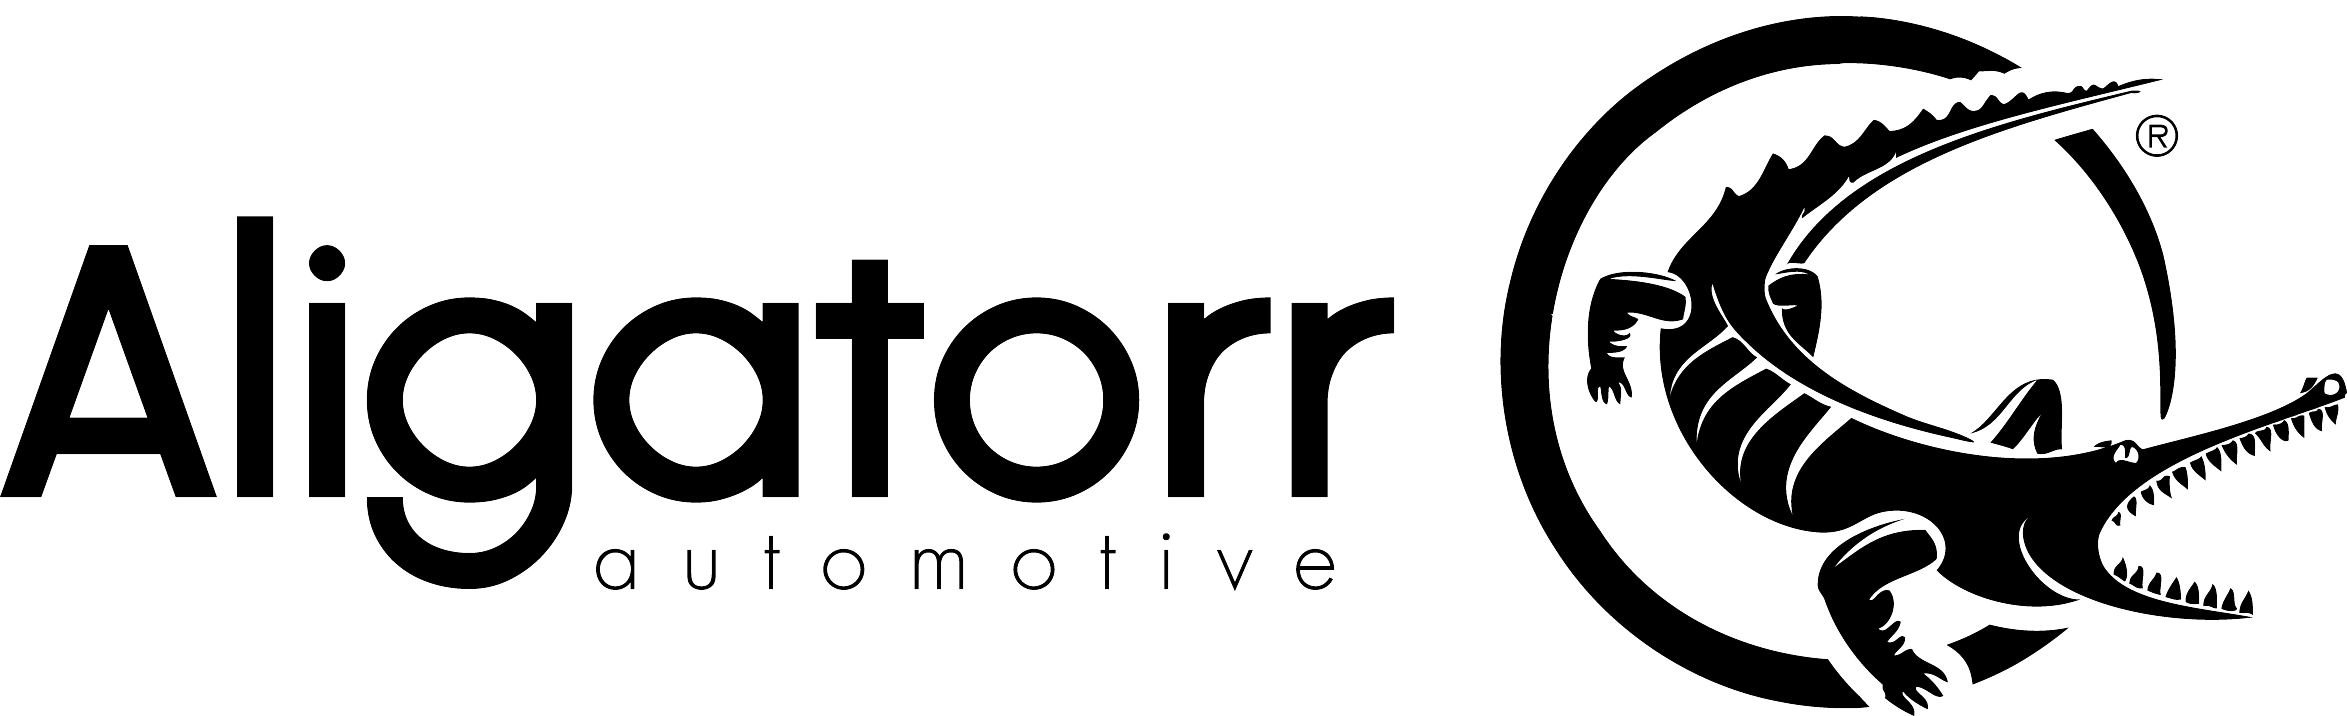 Logo Aligatorr Automotive